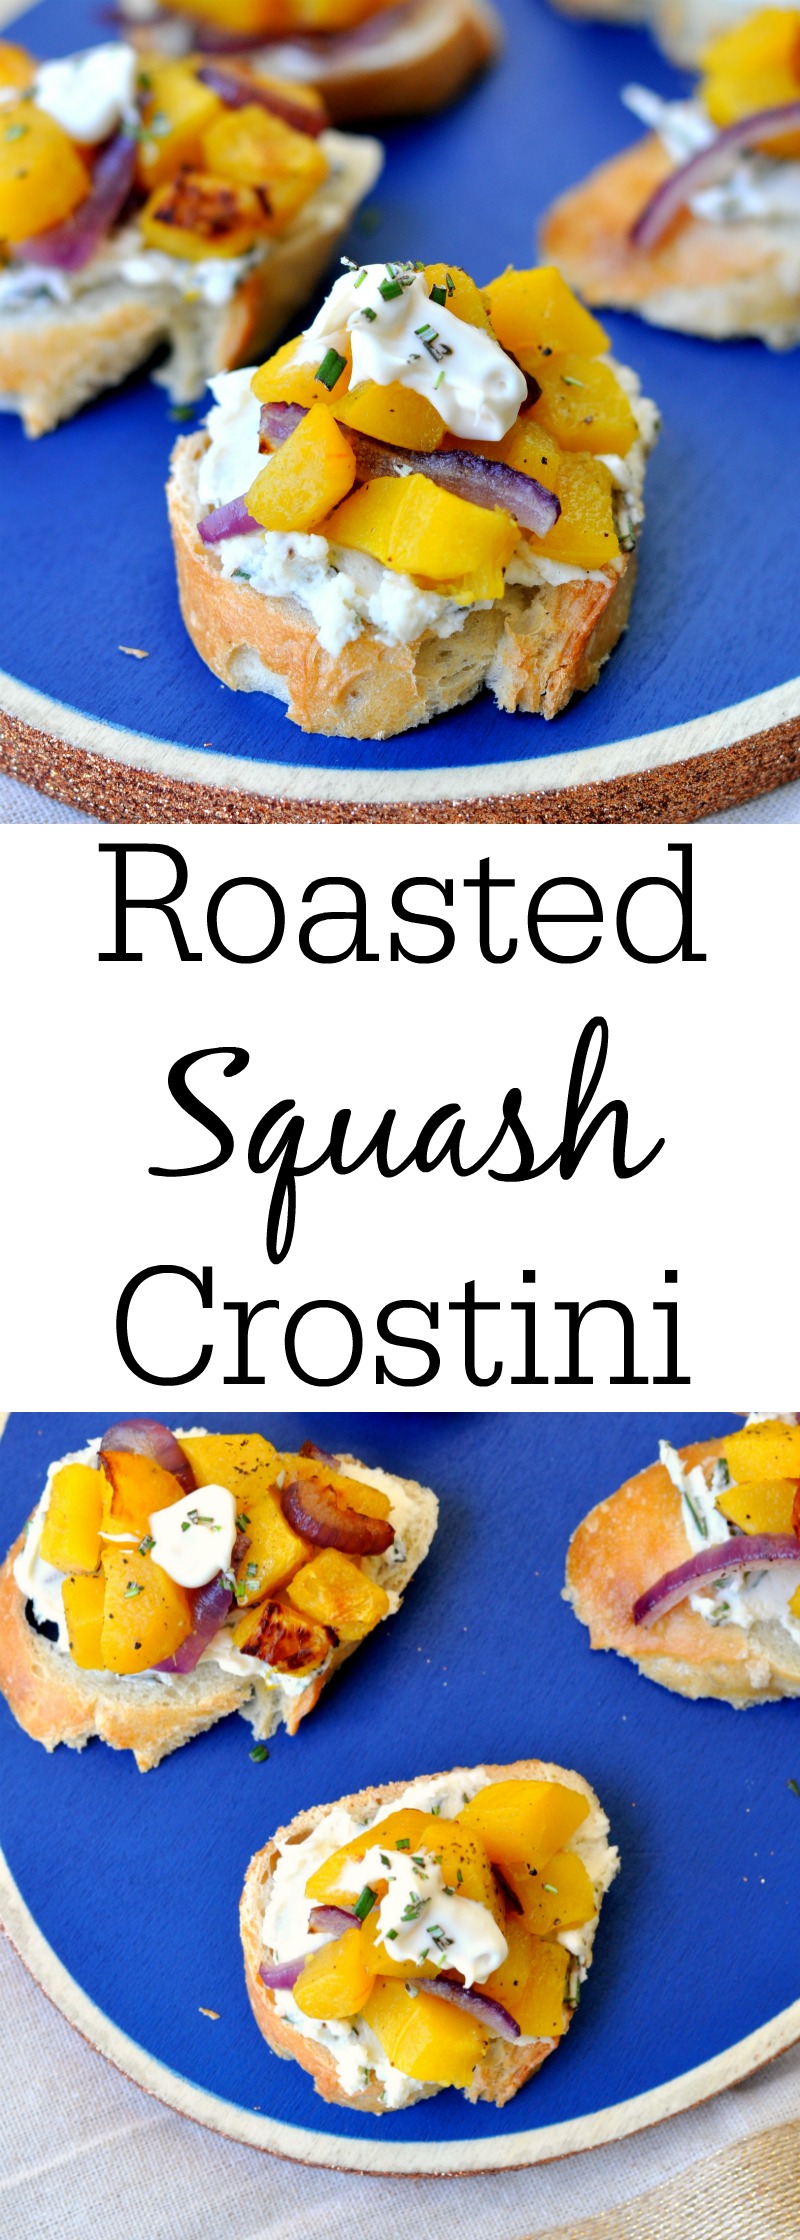 Roasted Squash Crostini